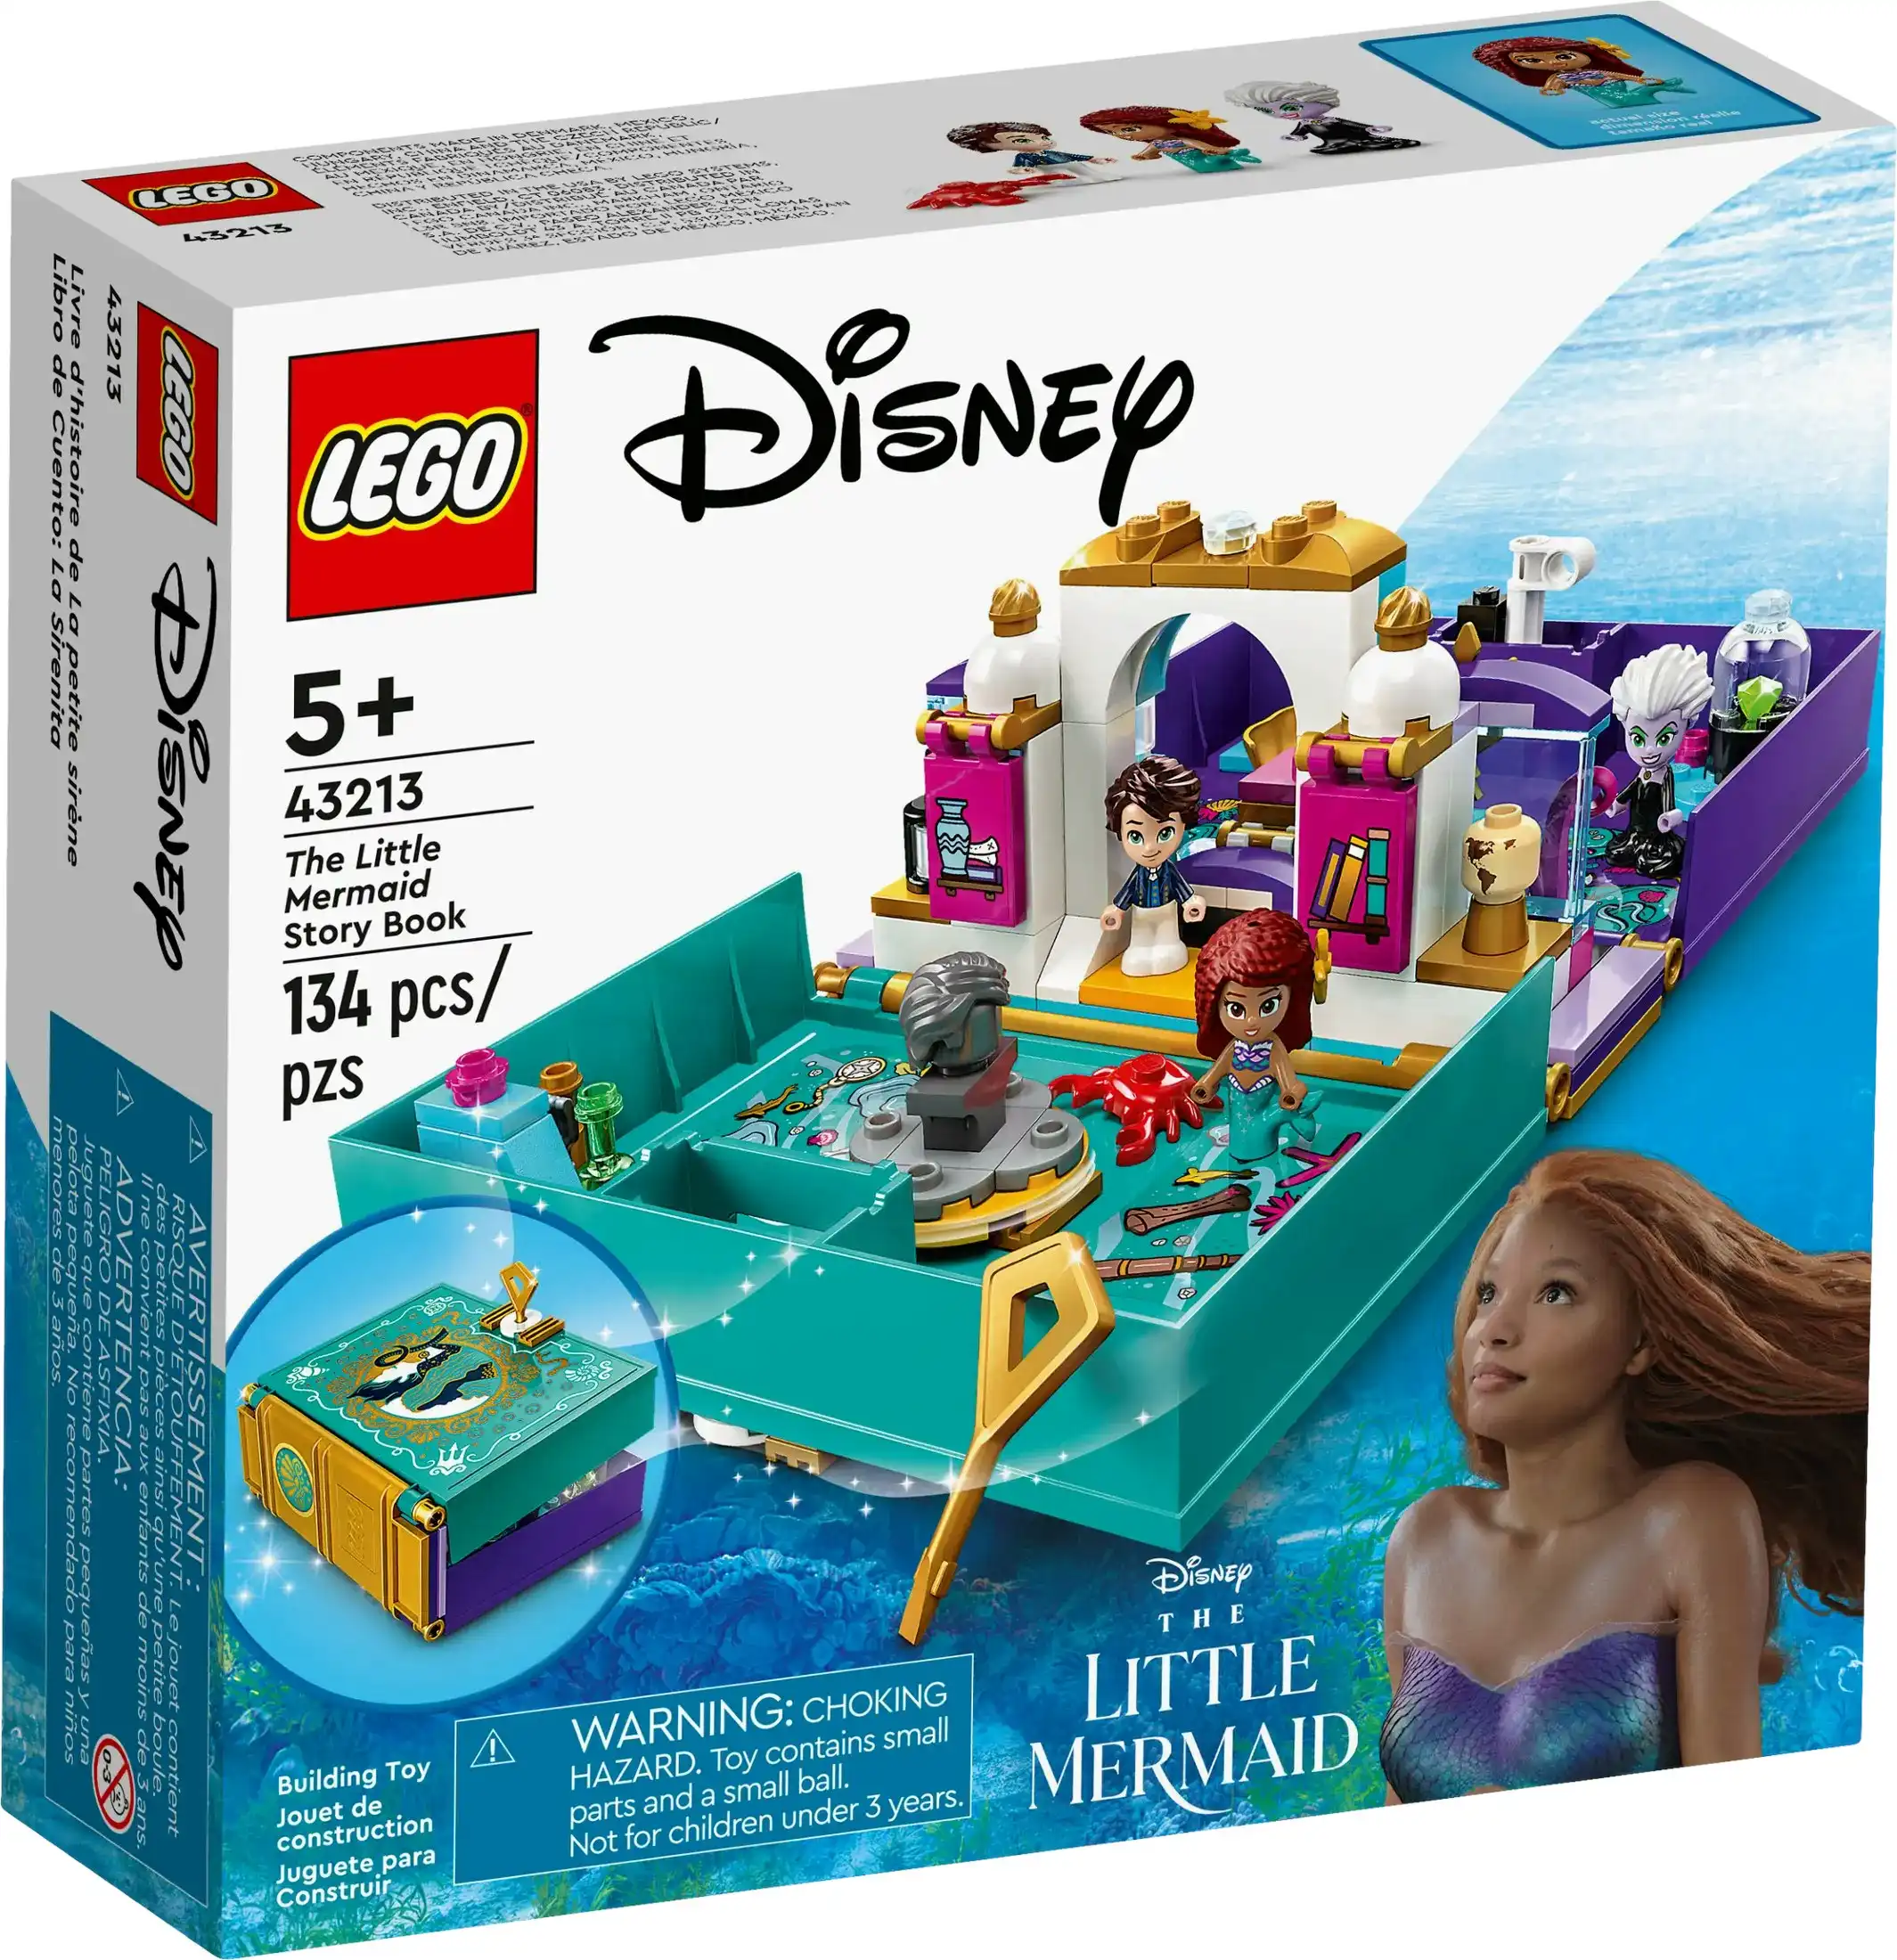 LEGO 43213 The Little Mermaid Story Book - Disney Princess